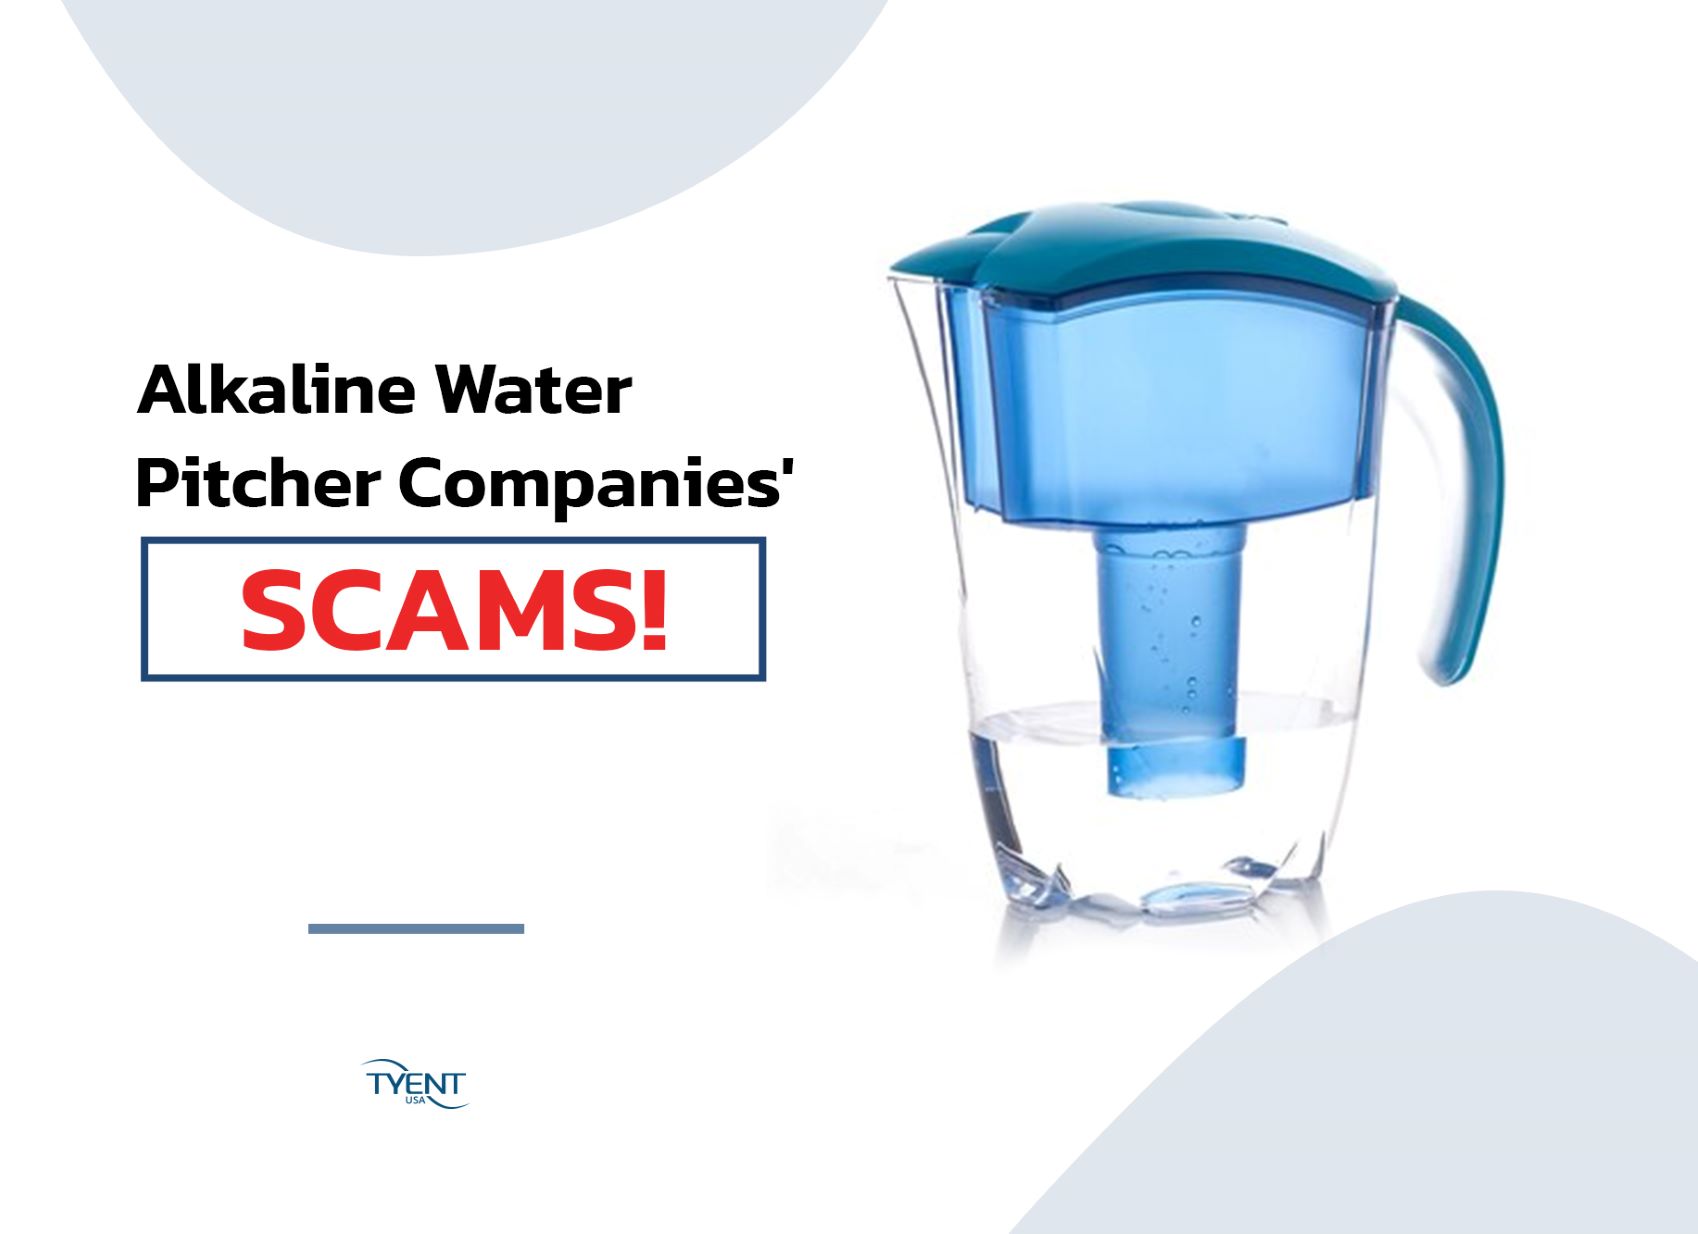 Alkaline Water Pitcher Companies’ Scams!